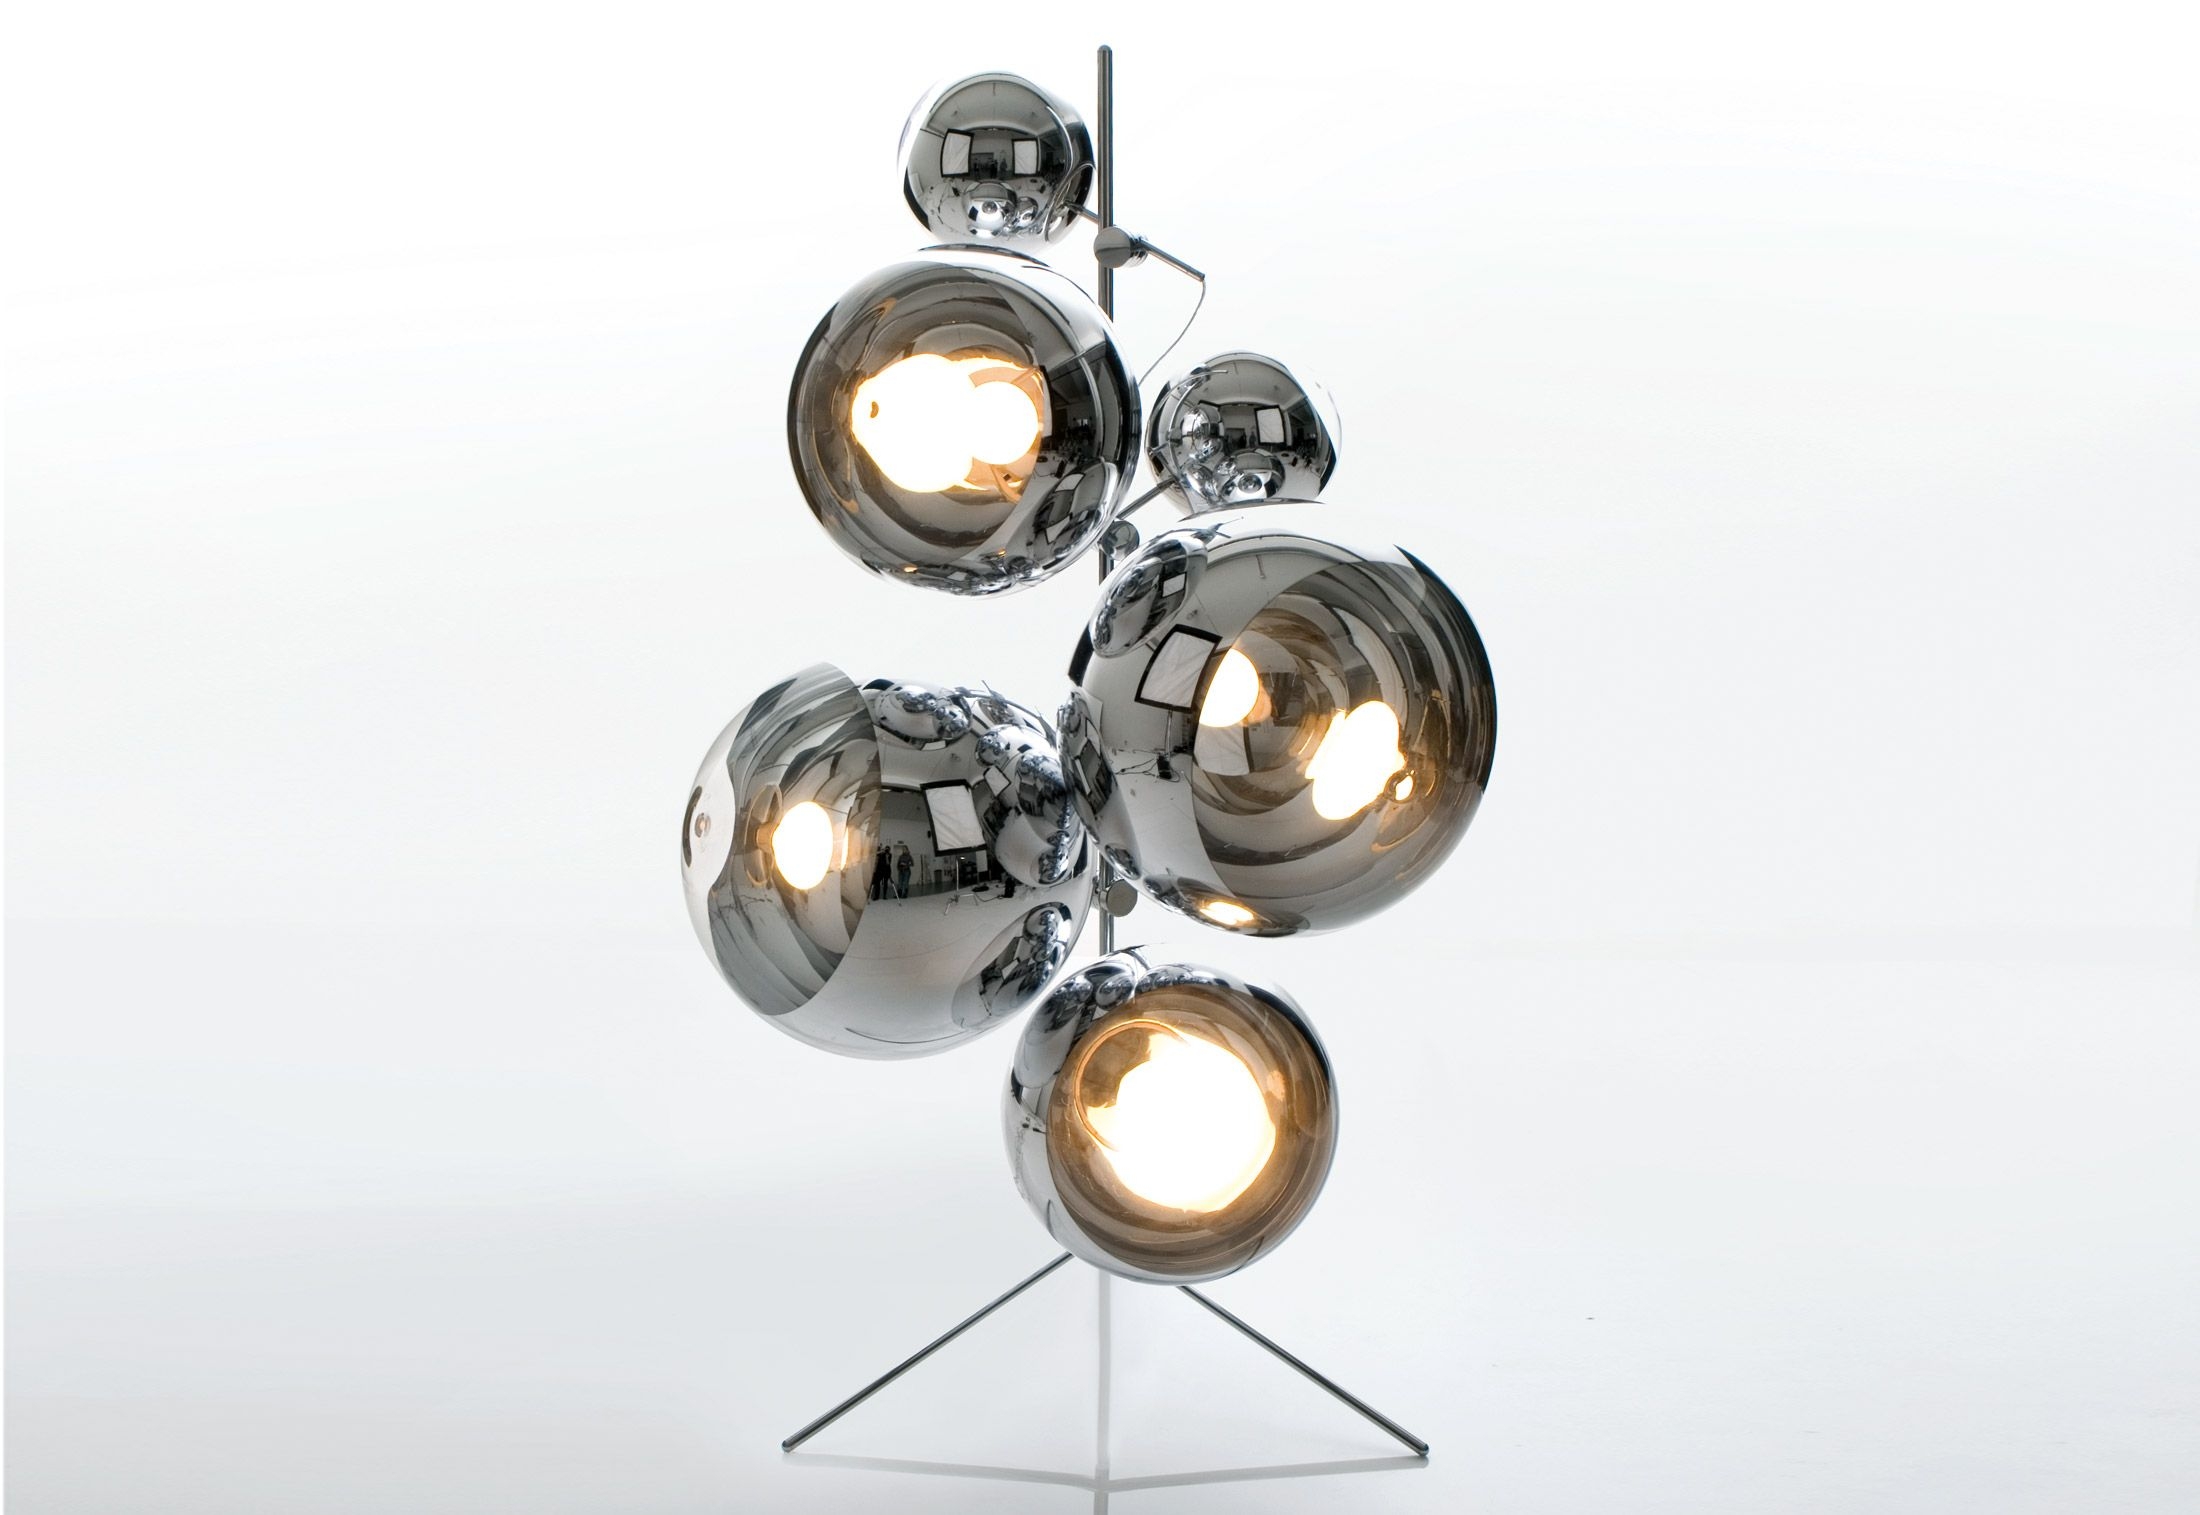 Mirror ball tripod floor lamp by tom dixon